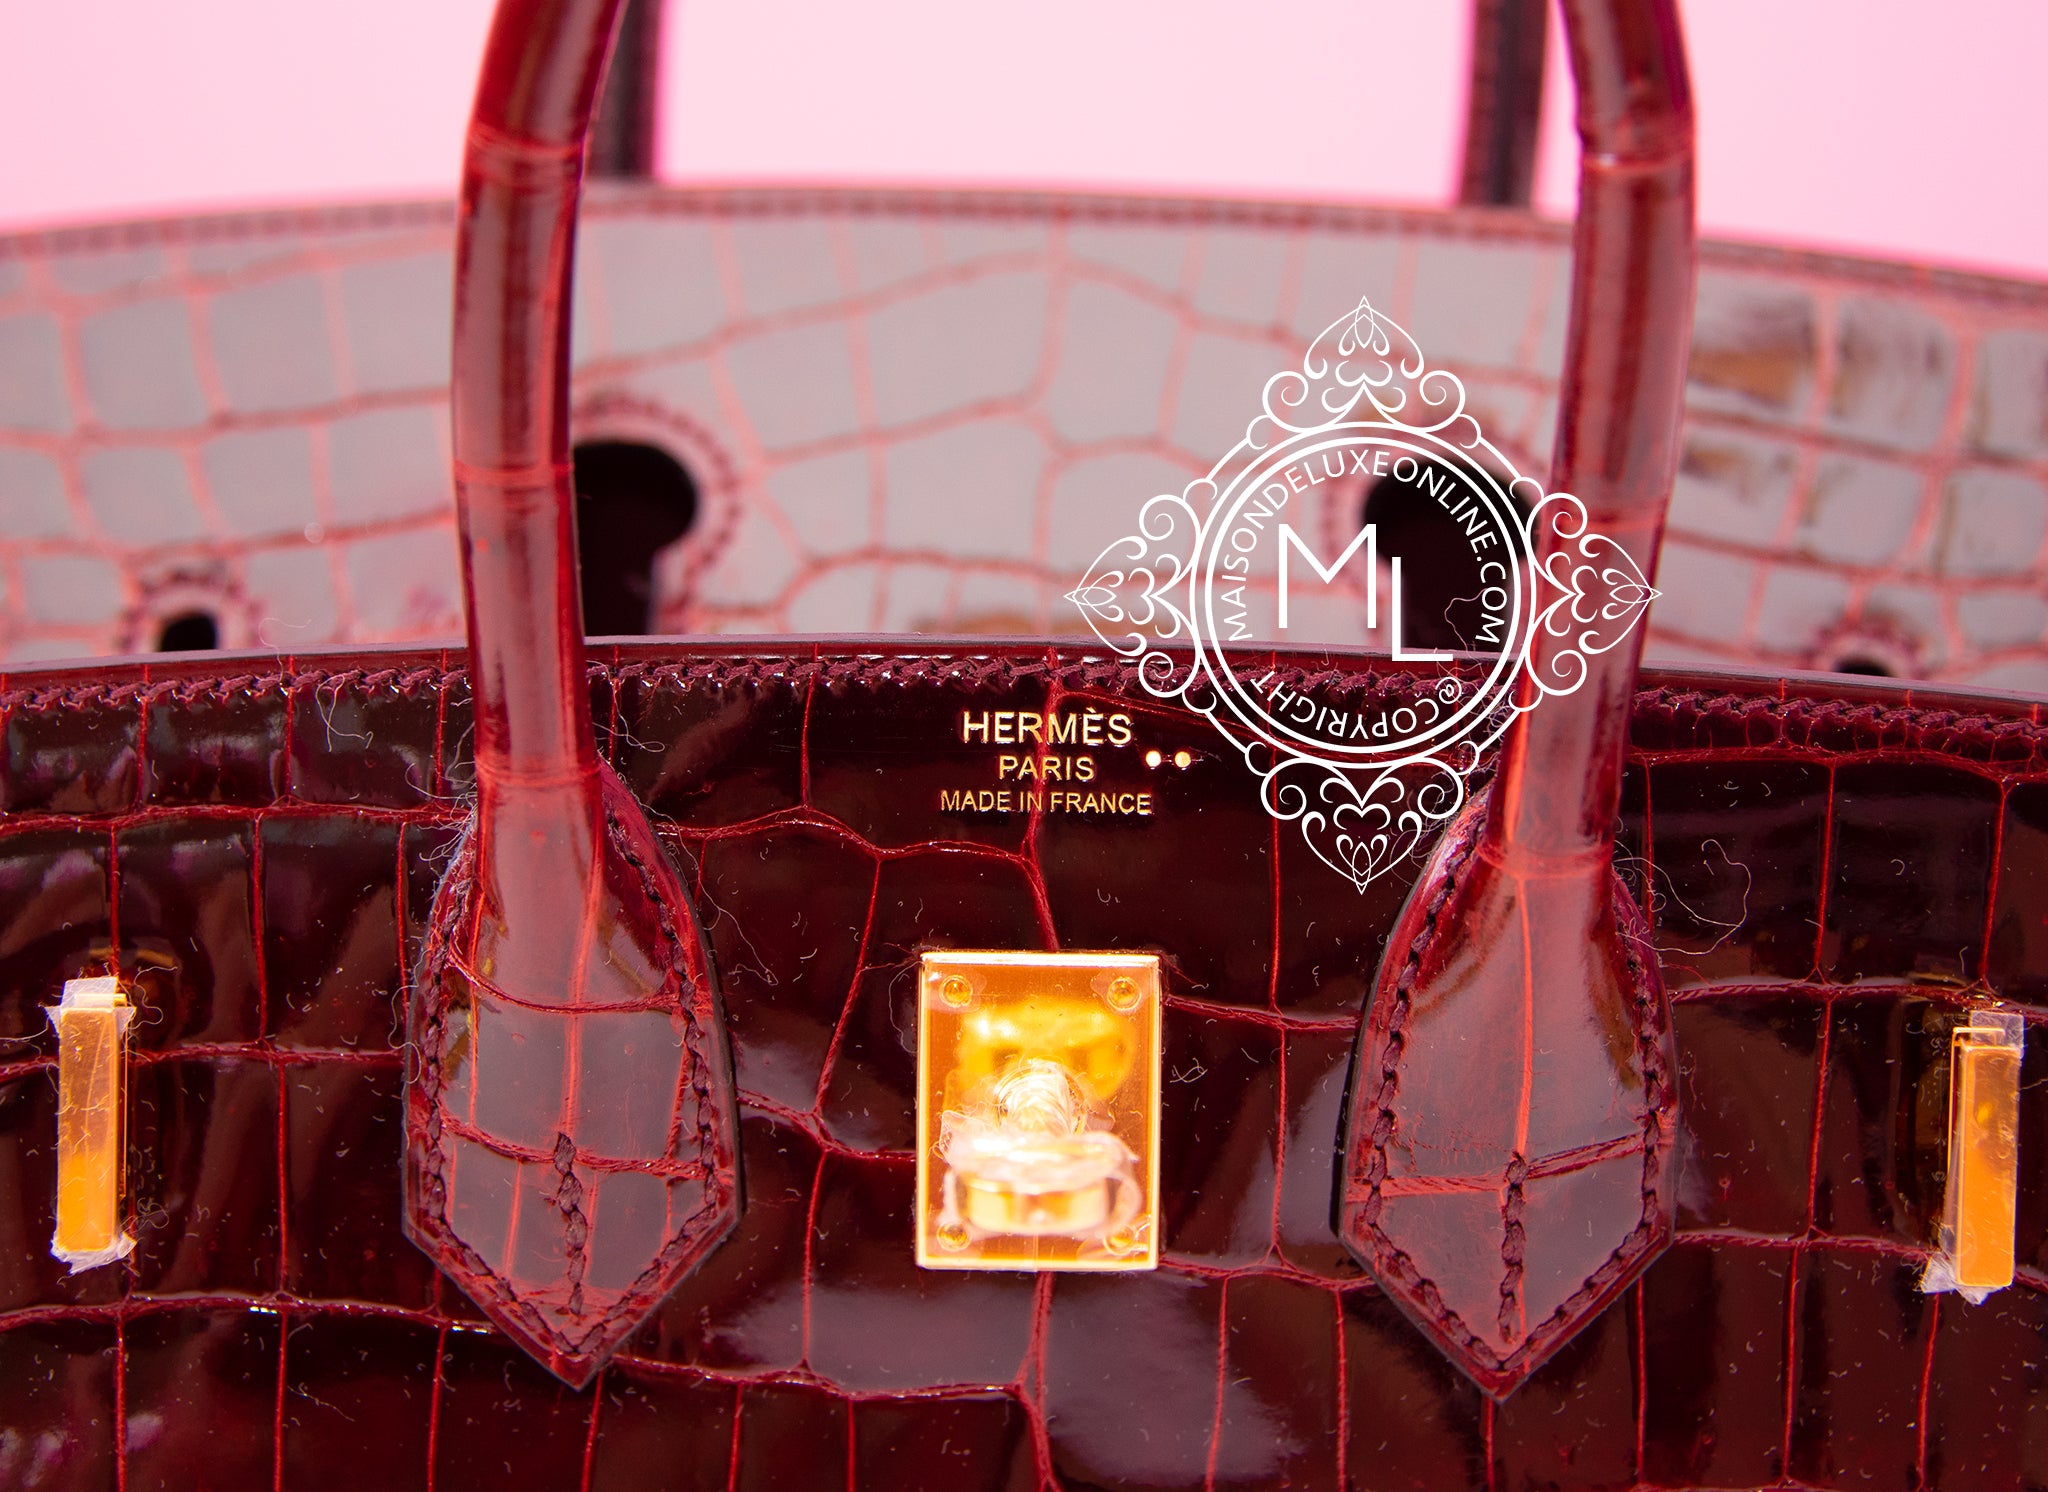 Birkin 25 crocodile handbag Hermès Burgundy in Crocodile - 27632390